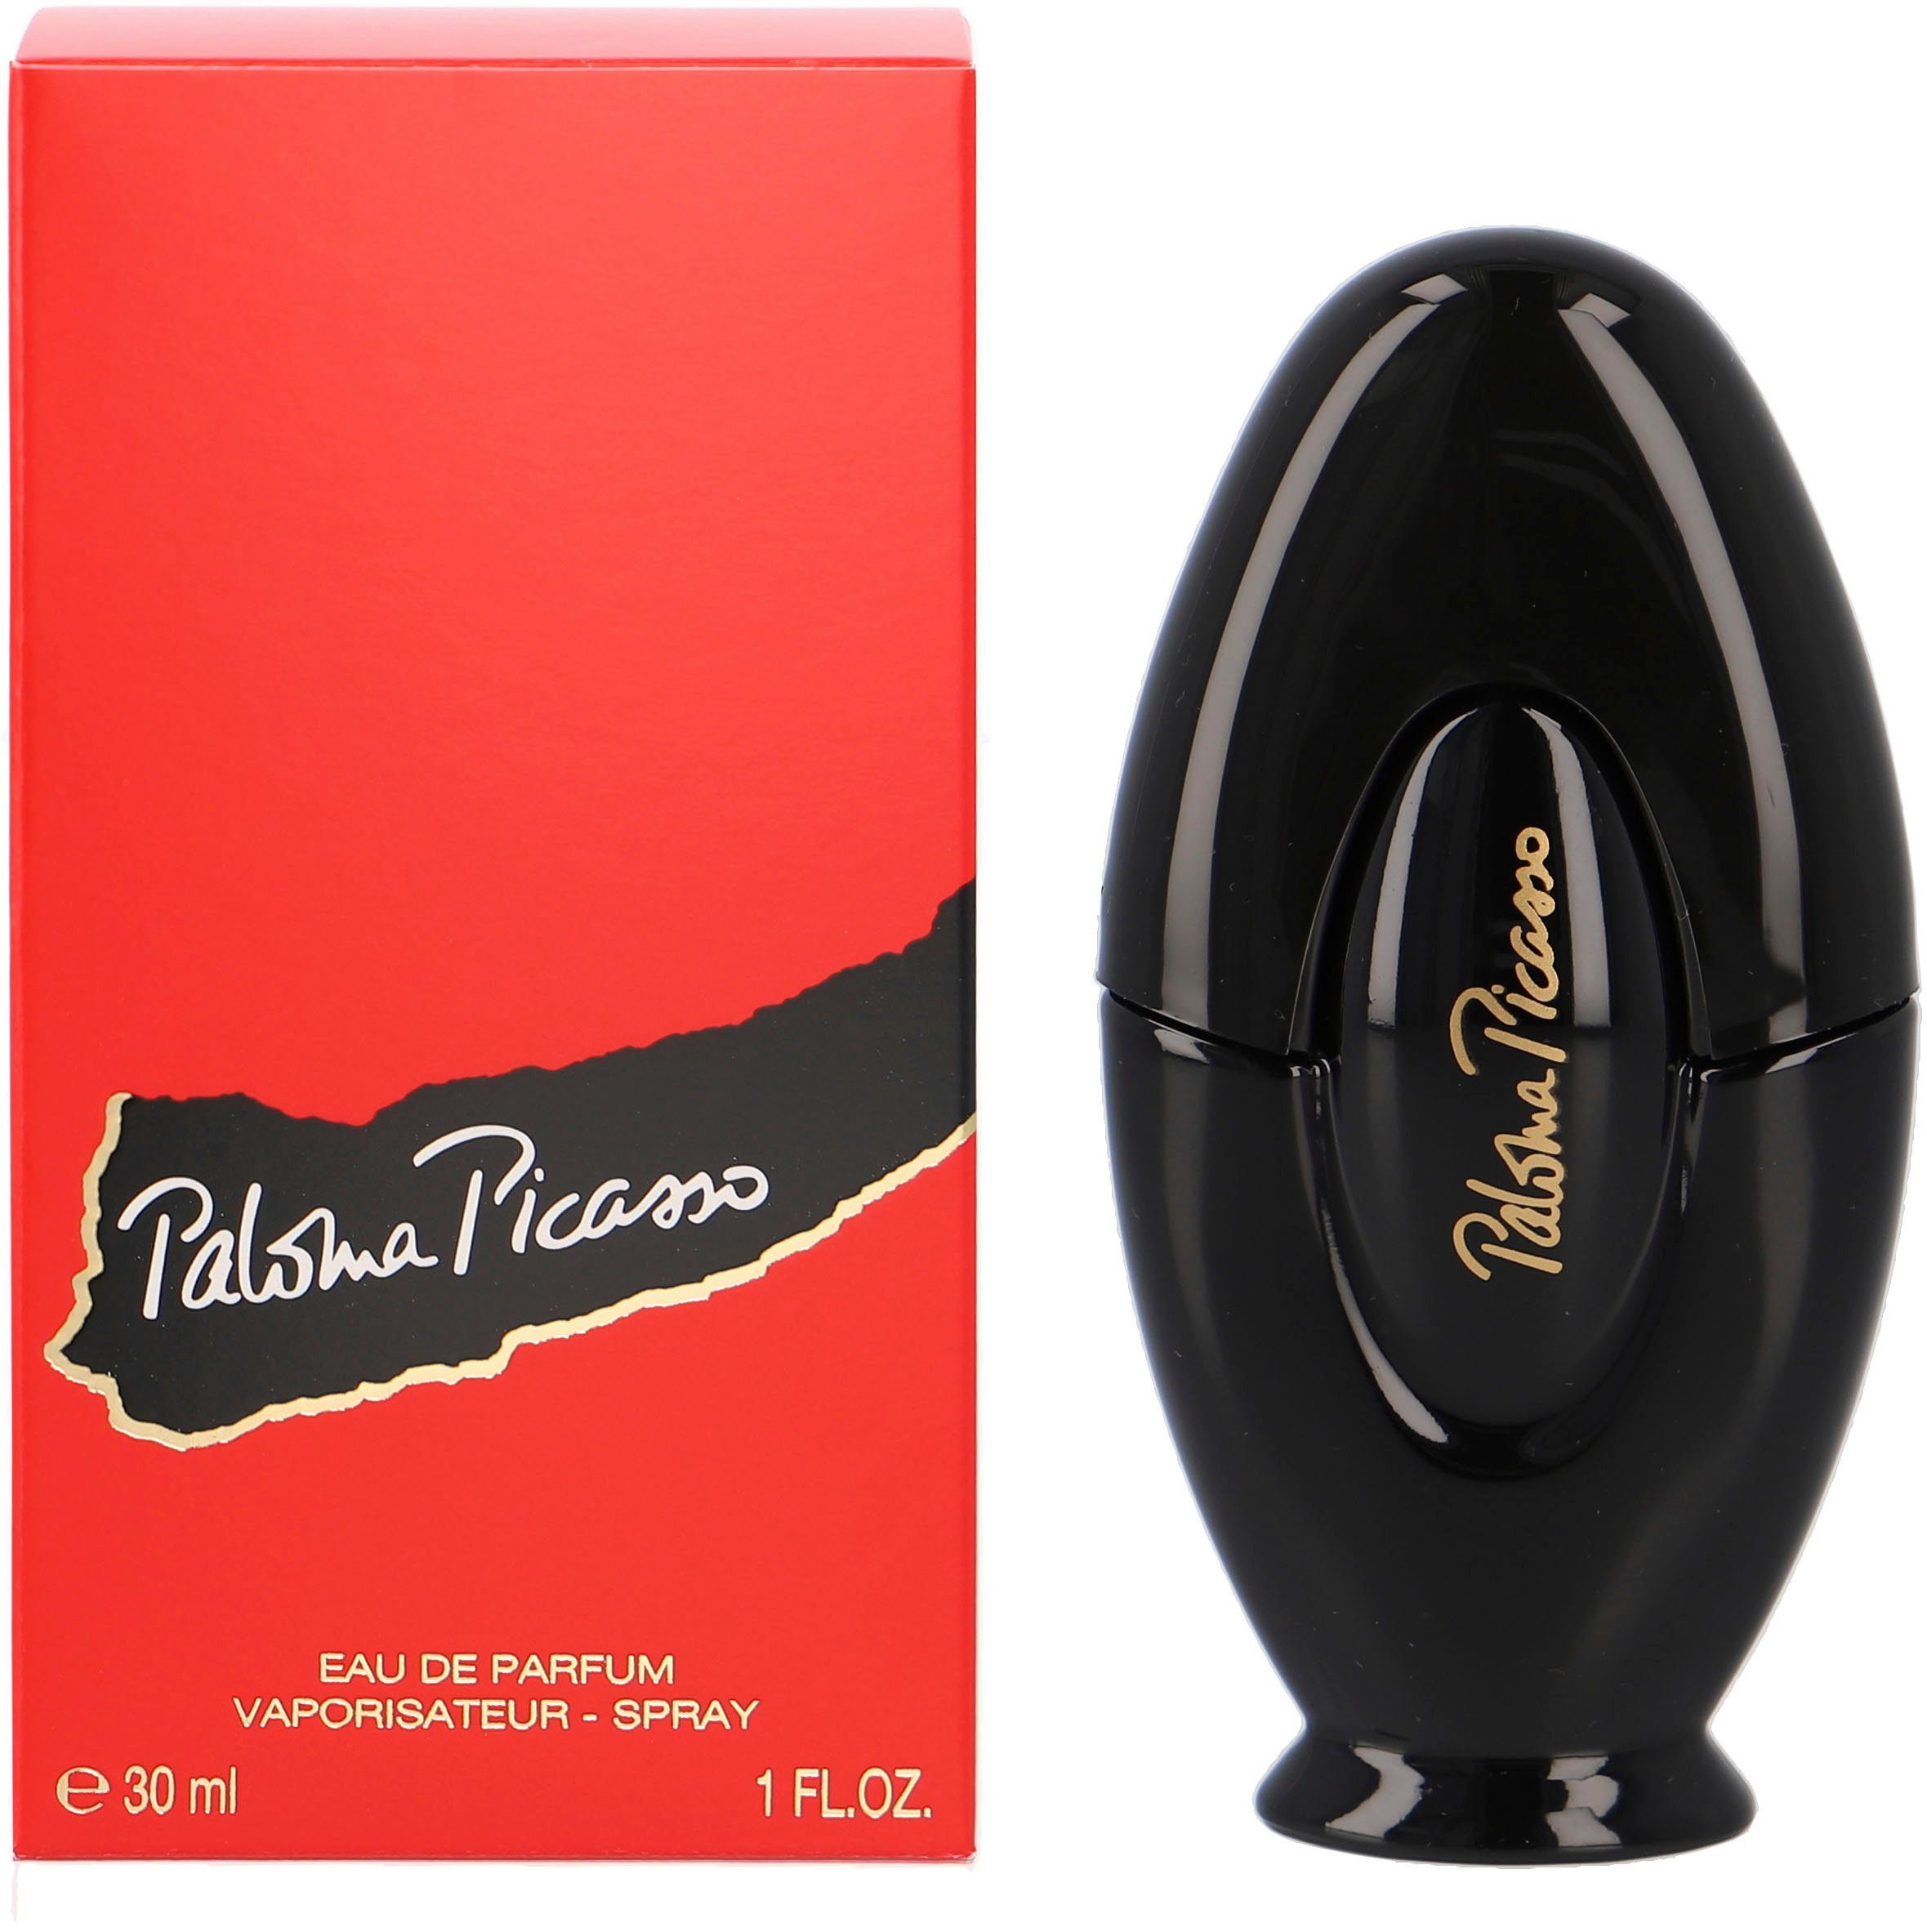 Paloma Picasso Parfum de Eau